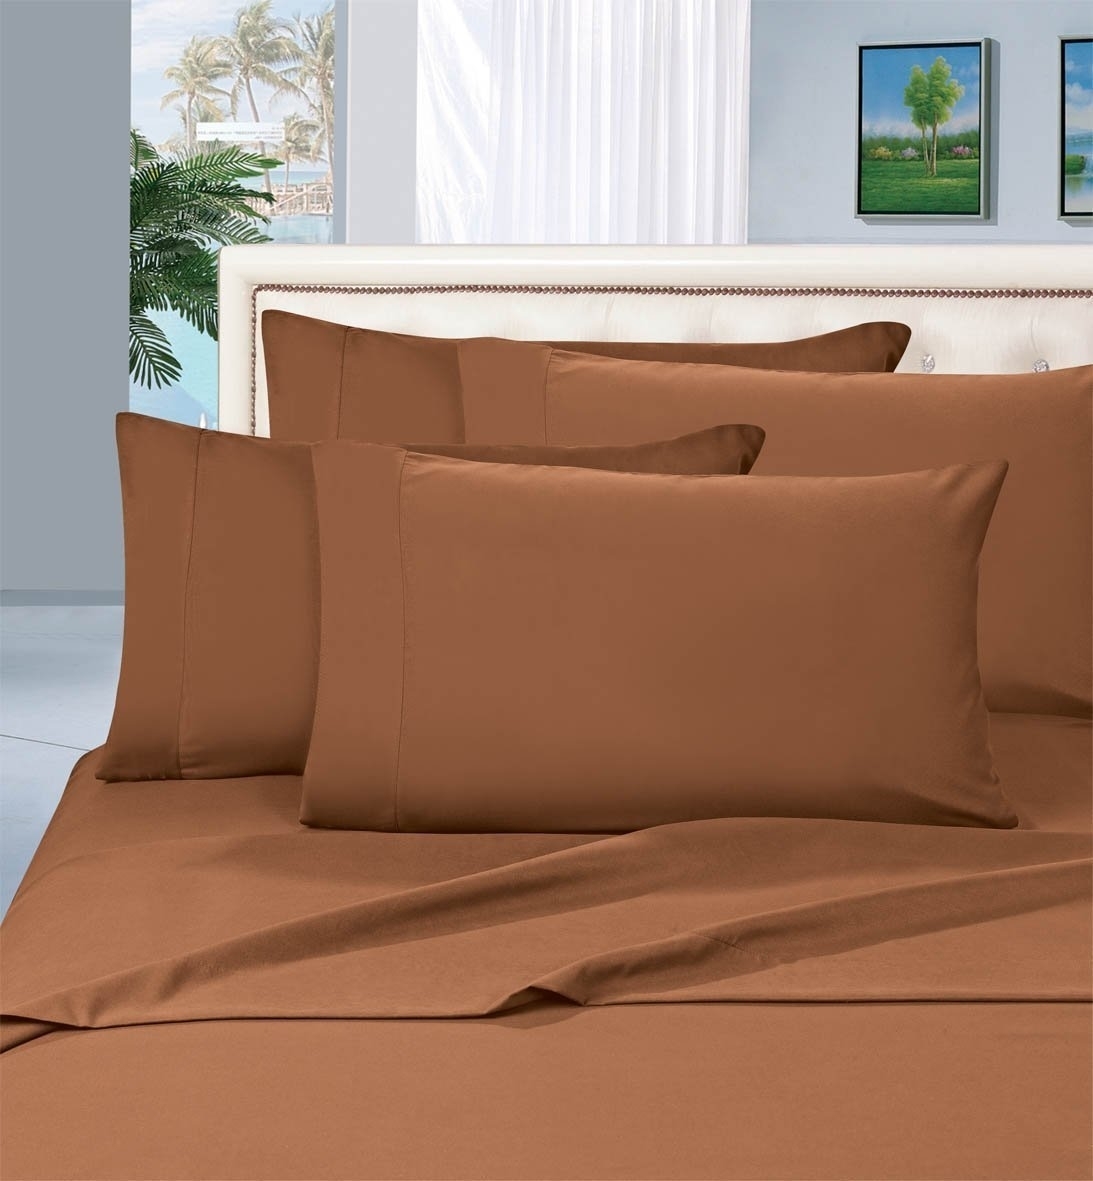 Elegant Comfort 1500 Series Wrinkle Resistant Egyptian Quality Hypoallergenic Ultra Soft Luxury 4-piece Sheet Set, California King, Bronze